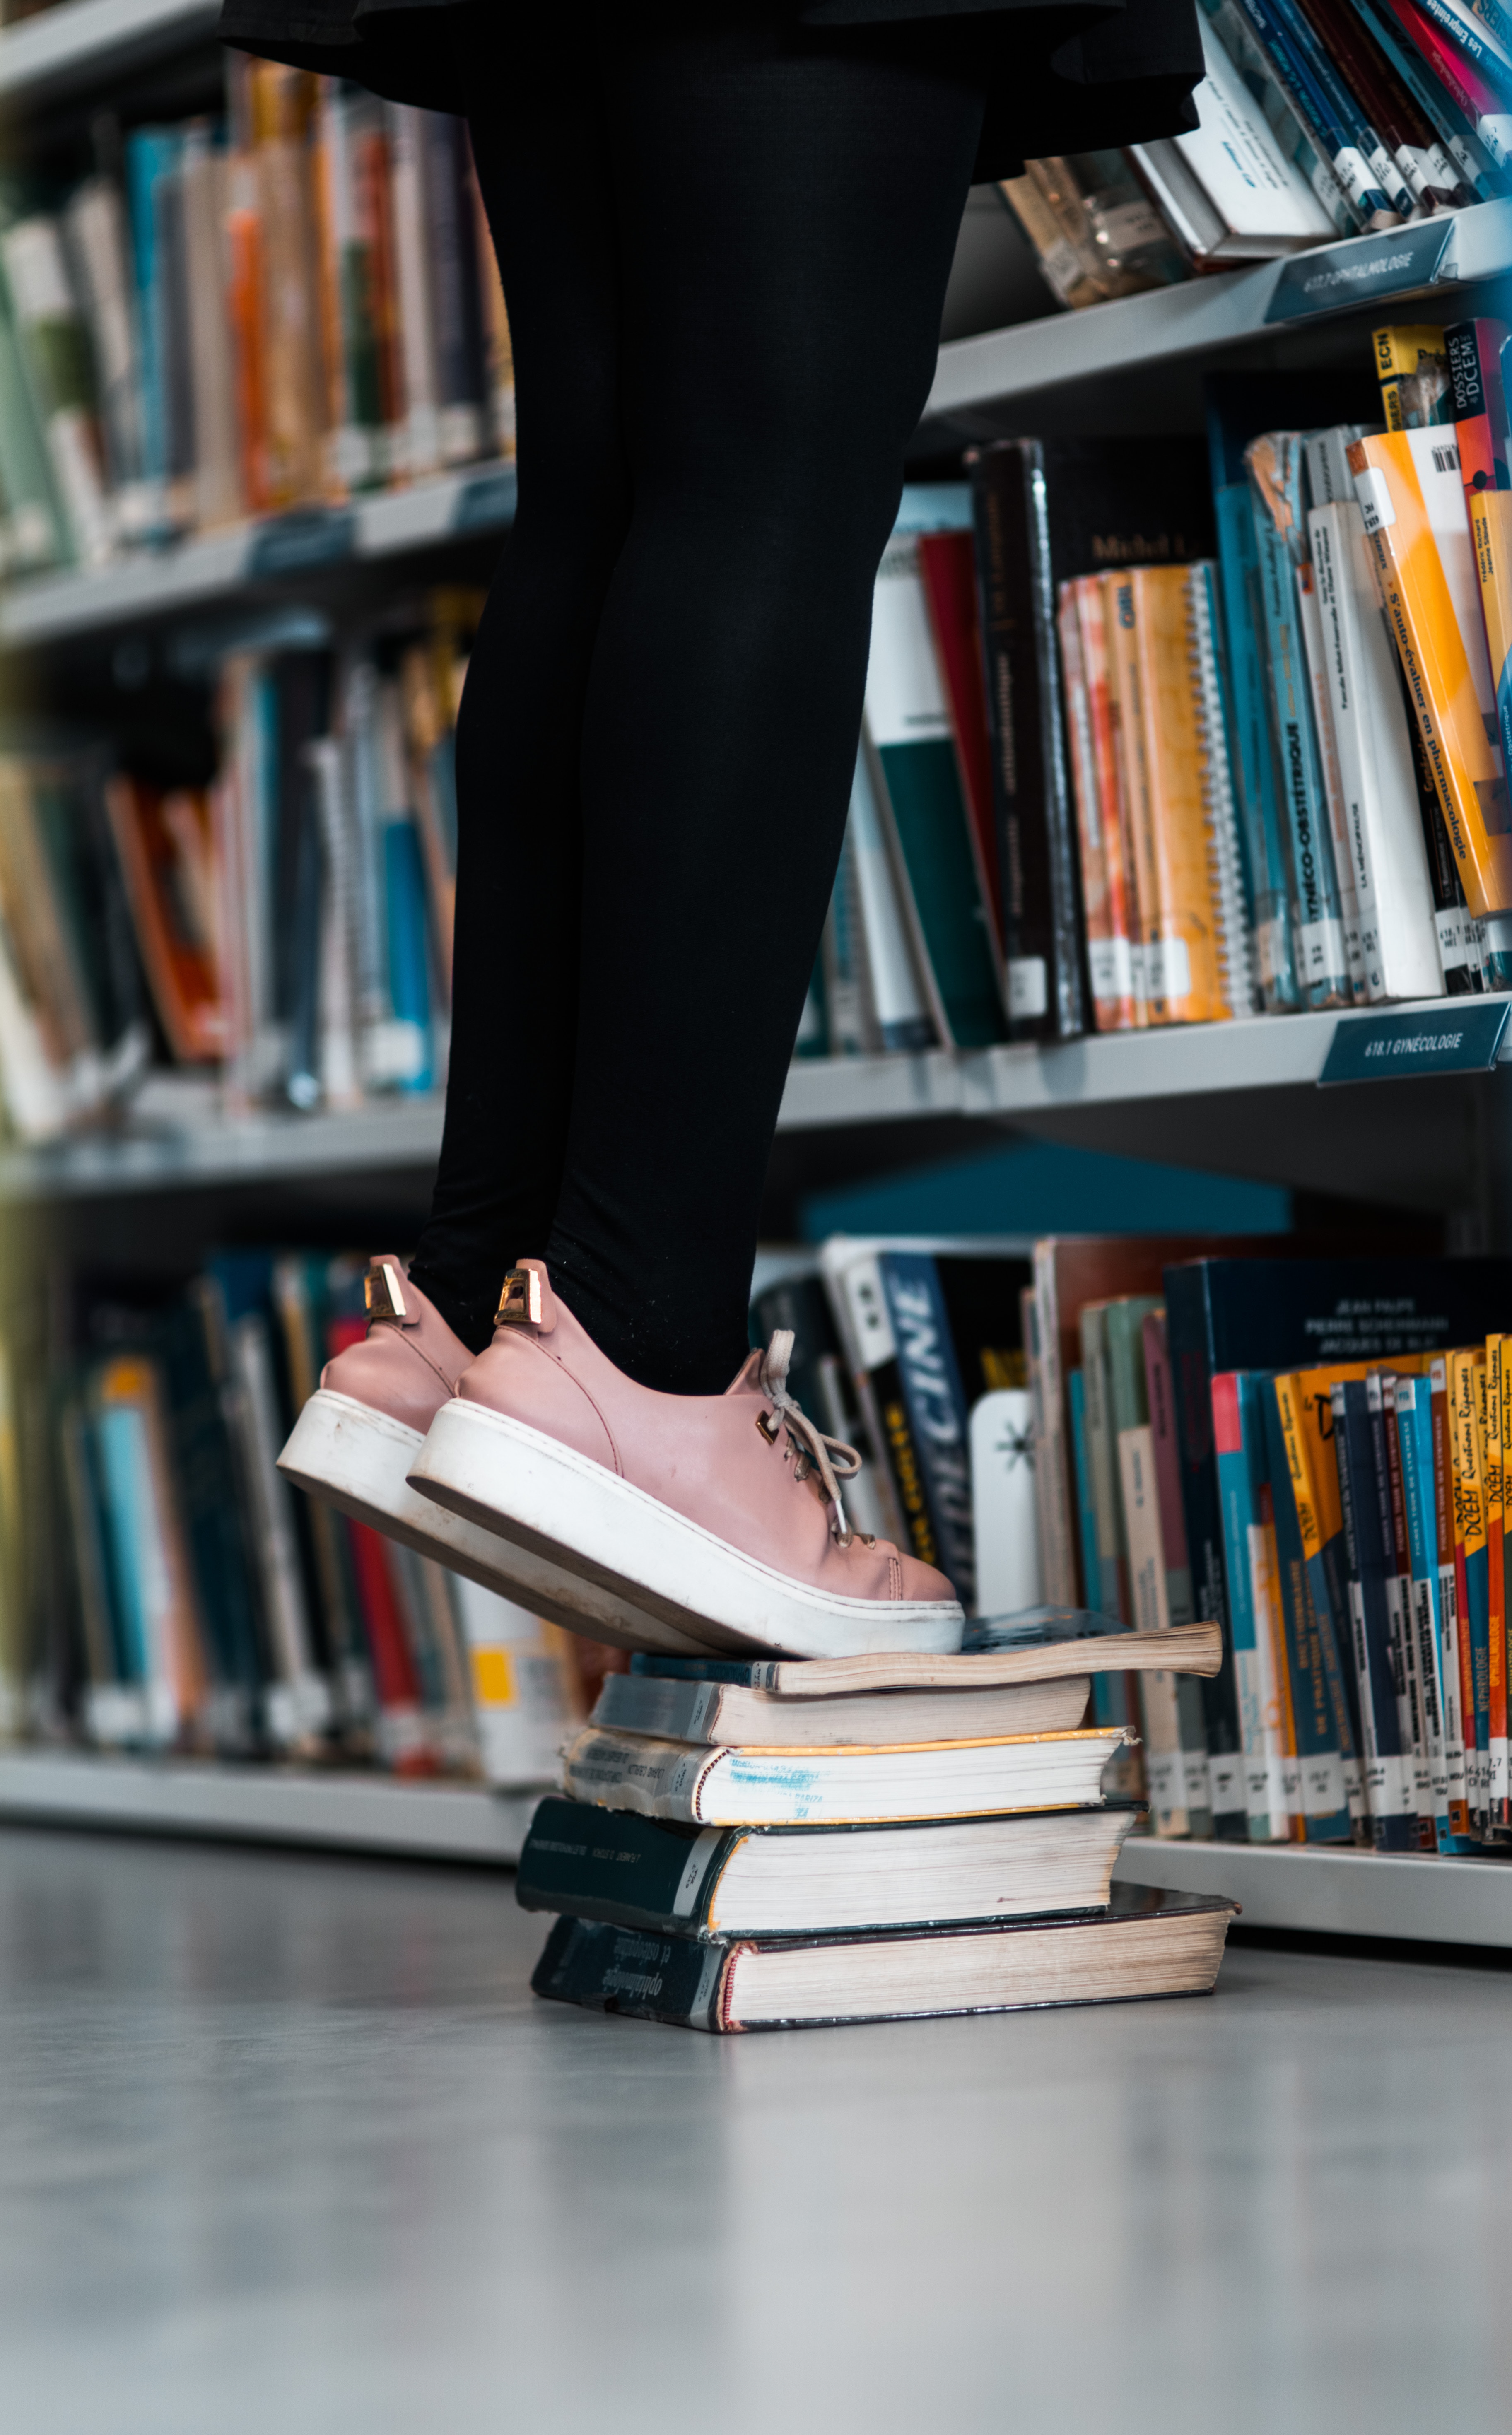 books, miscellanea, miscellaneous, legs, sneakers, library, bookshelves